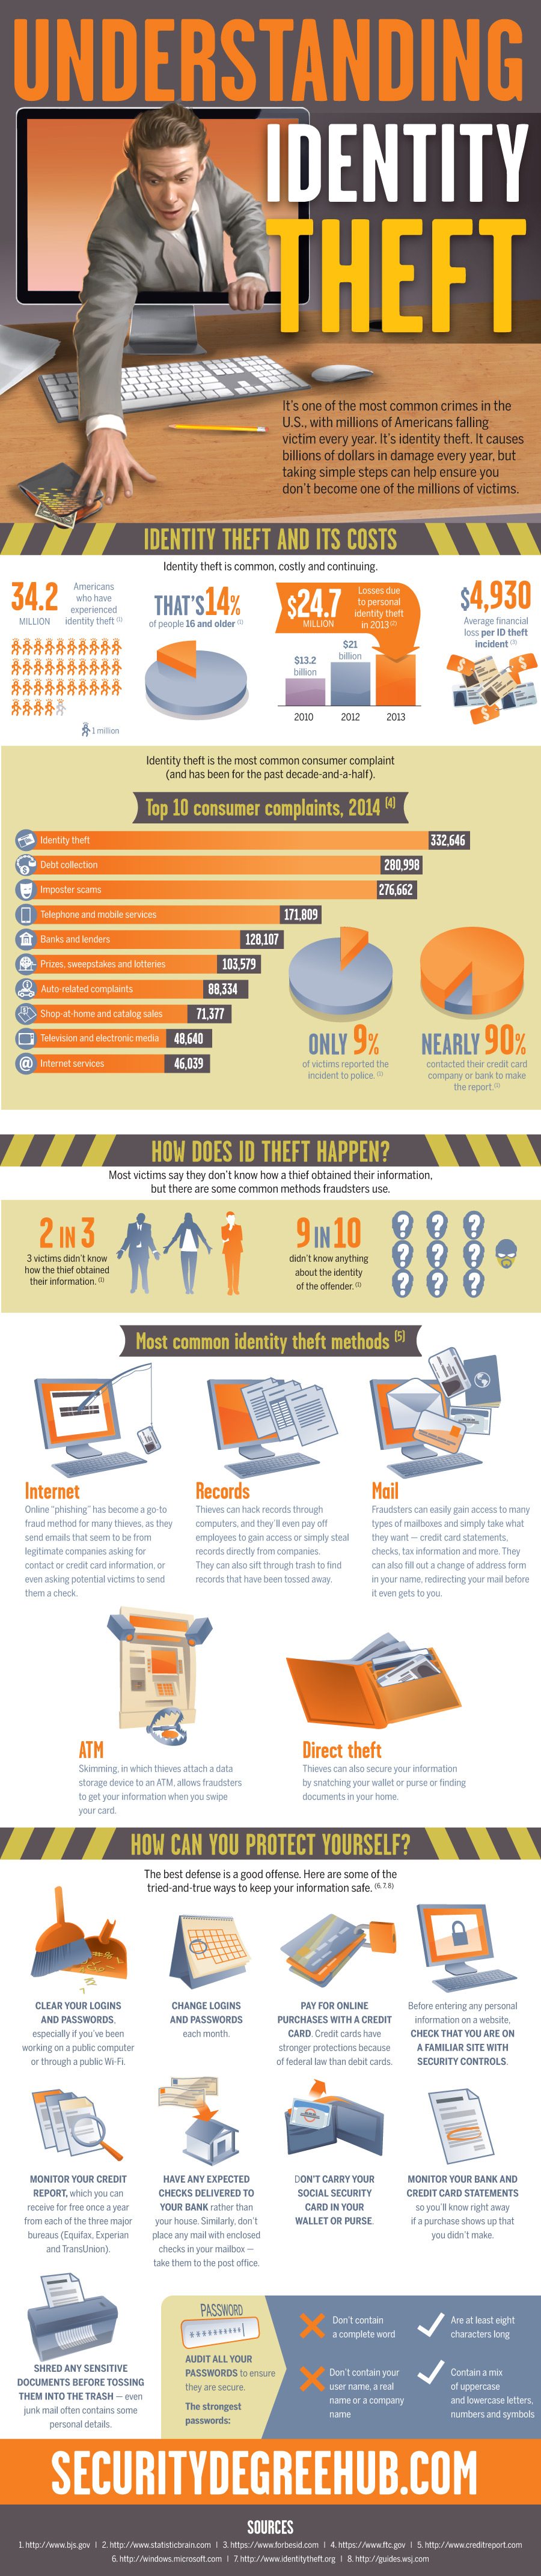 Understanding Identity Theft infographic